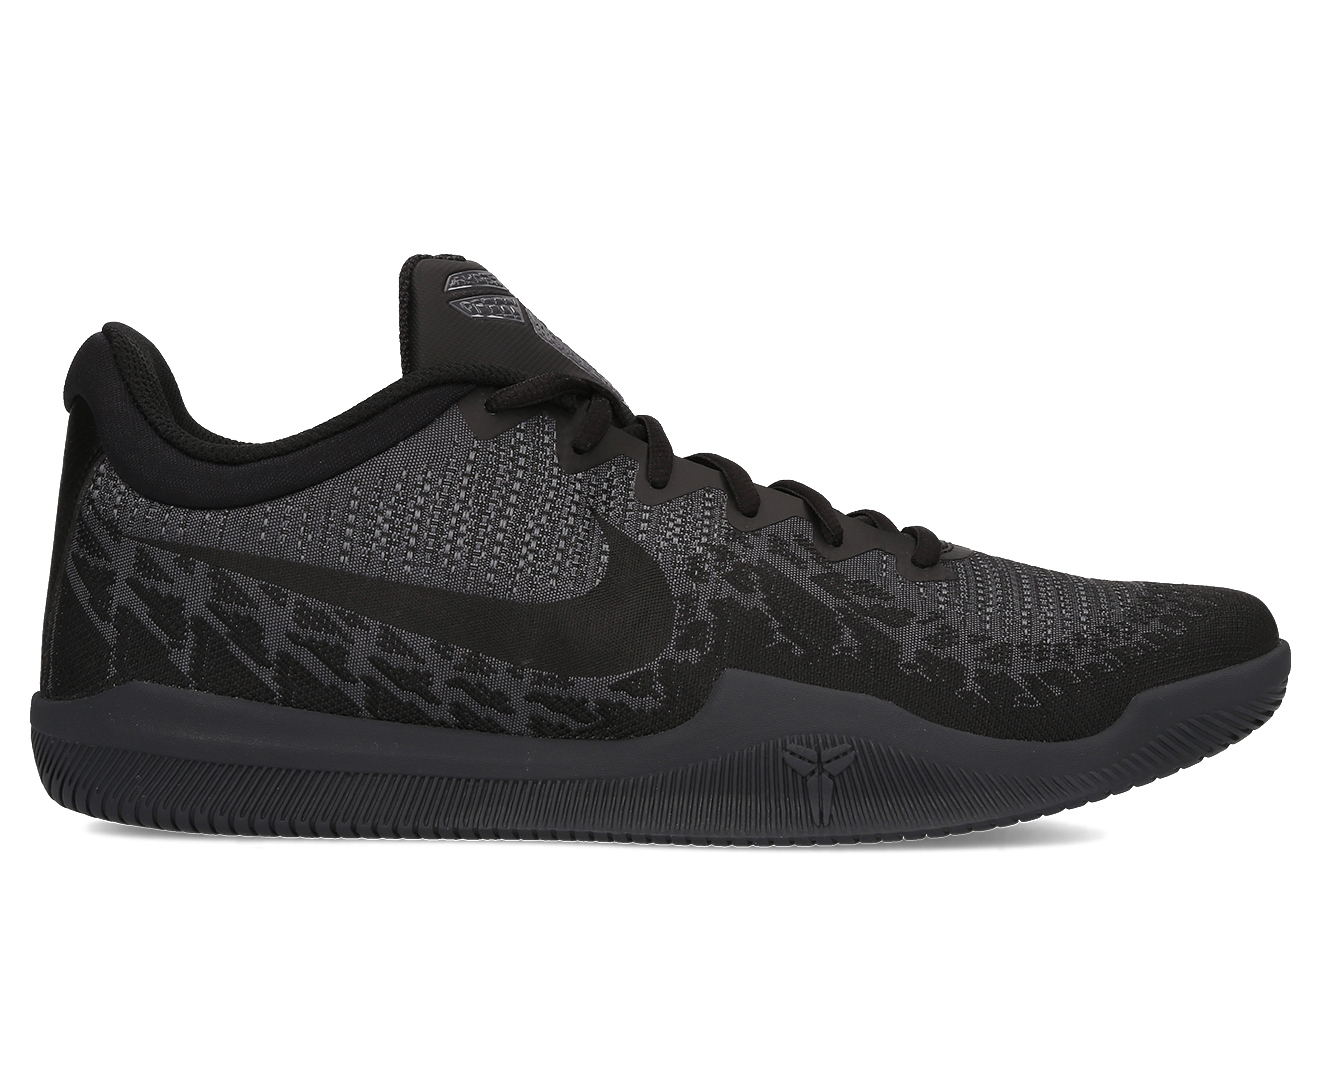 Nike Men's Mamba Rage Shoe - Black/Black/Dark Grey | Catch.co.nz